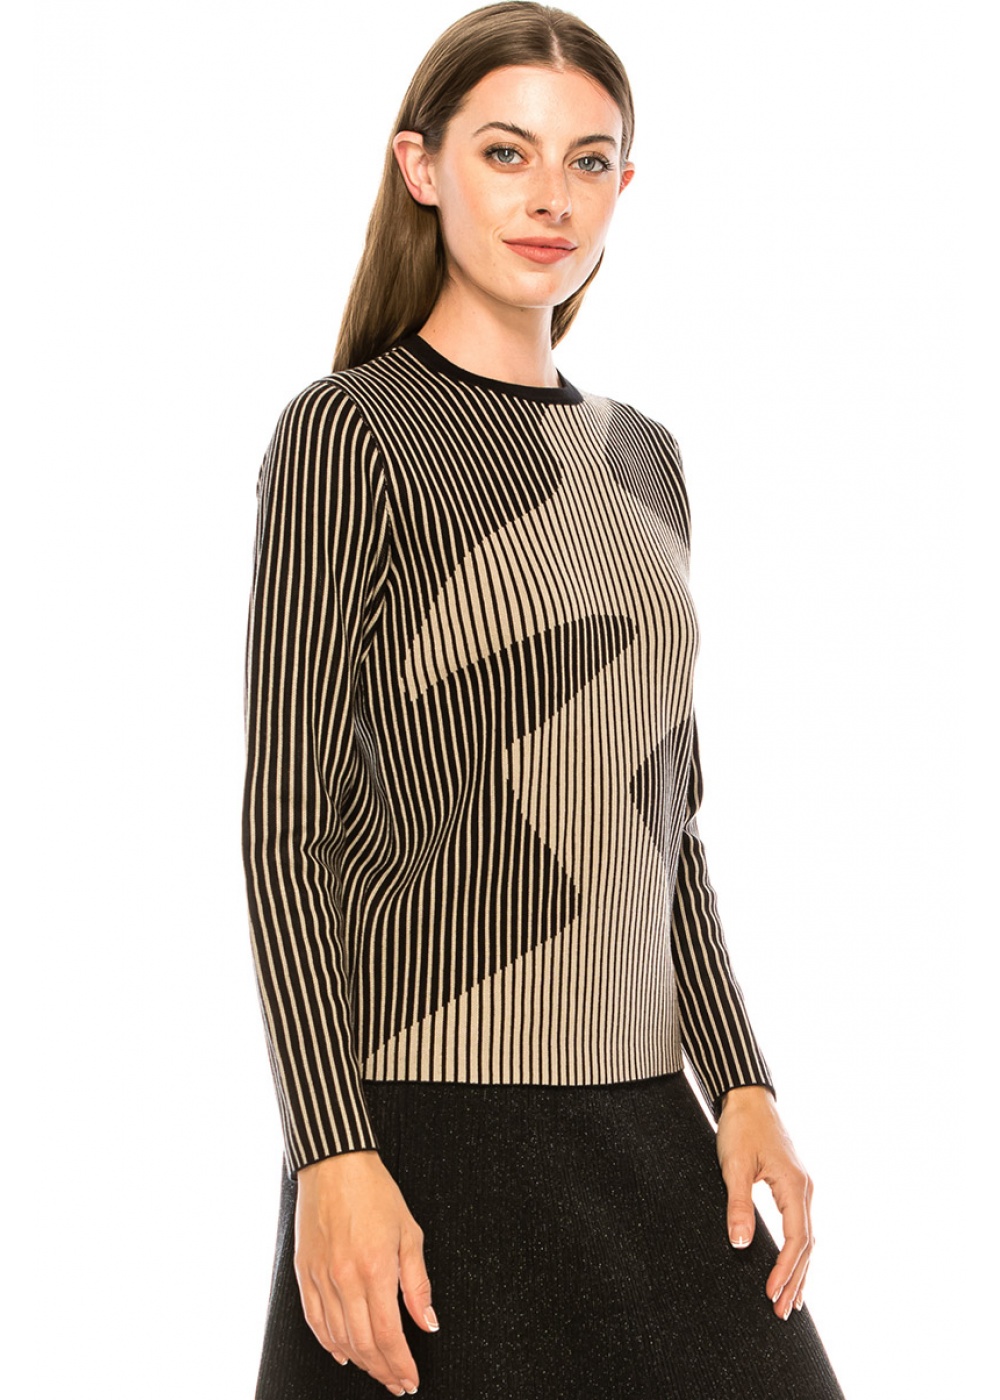 Thin-striped sweater in black